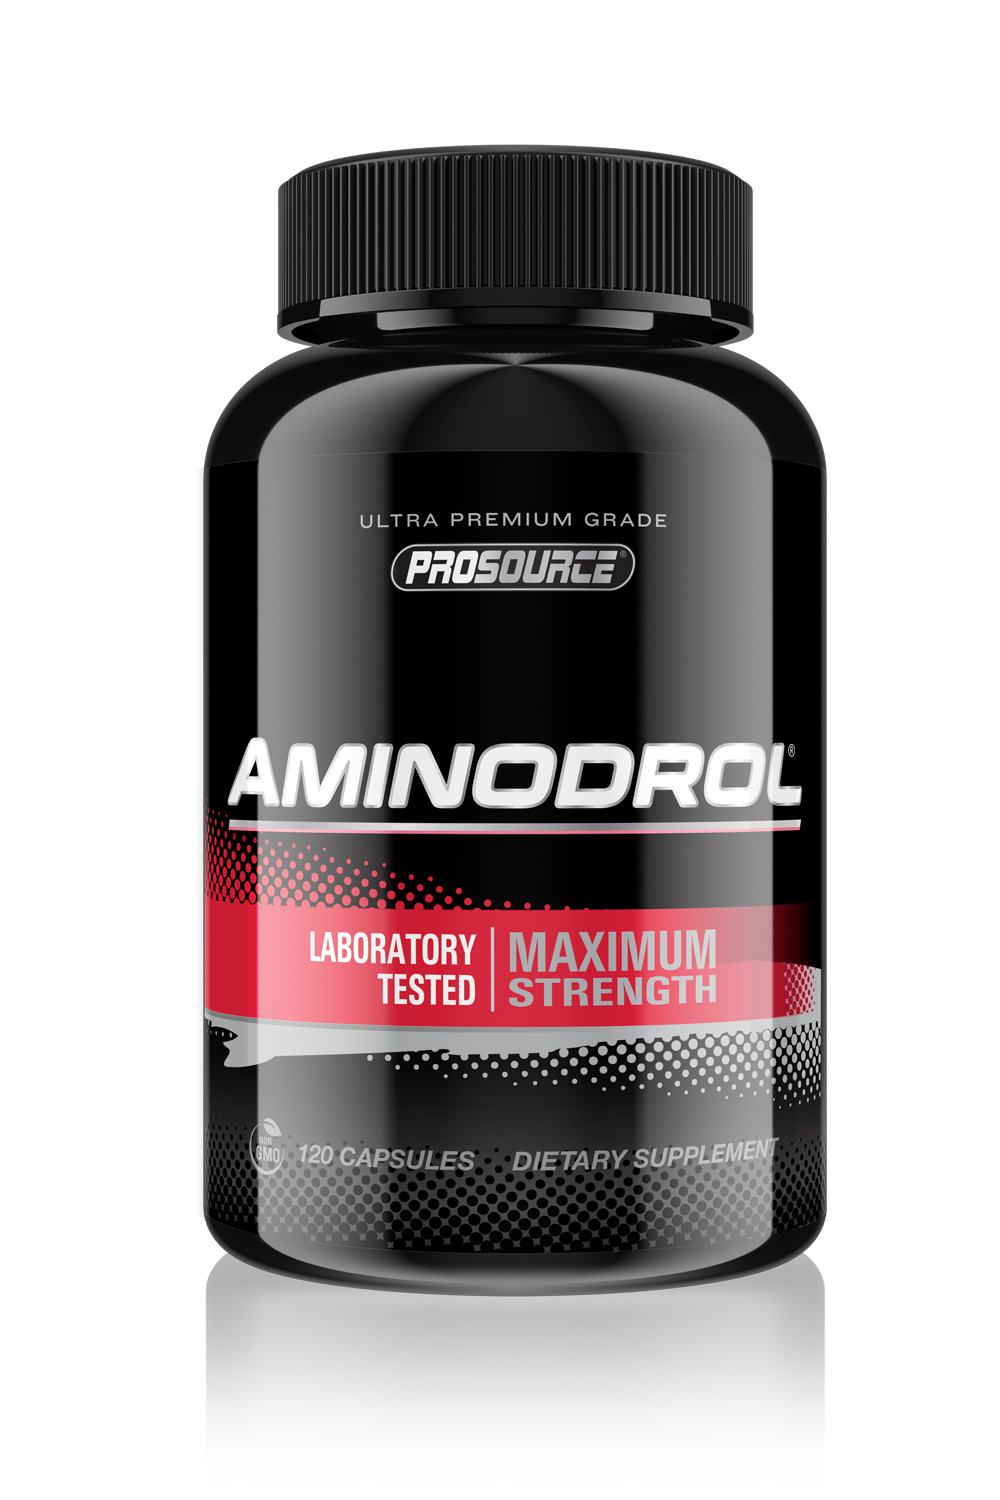 Aminodrol labratory tested maximum strength 120 capsules 